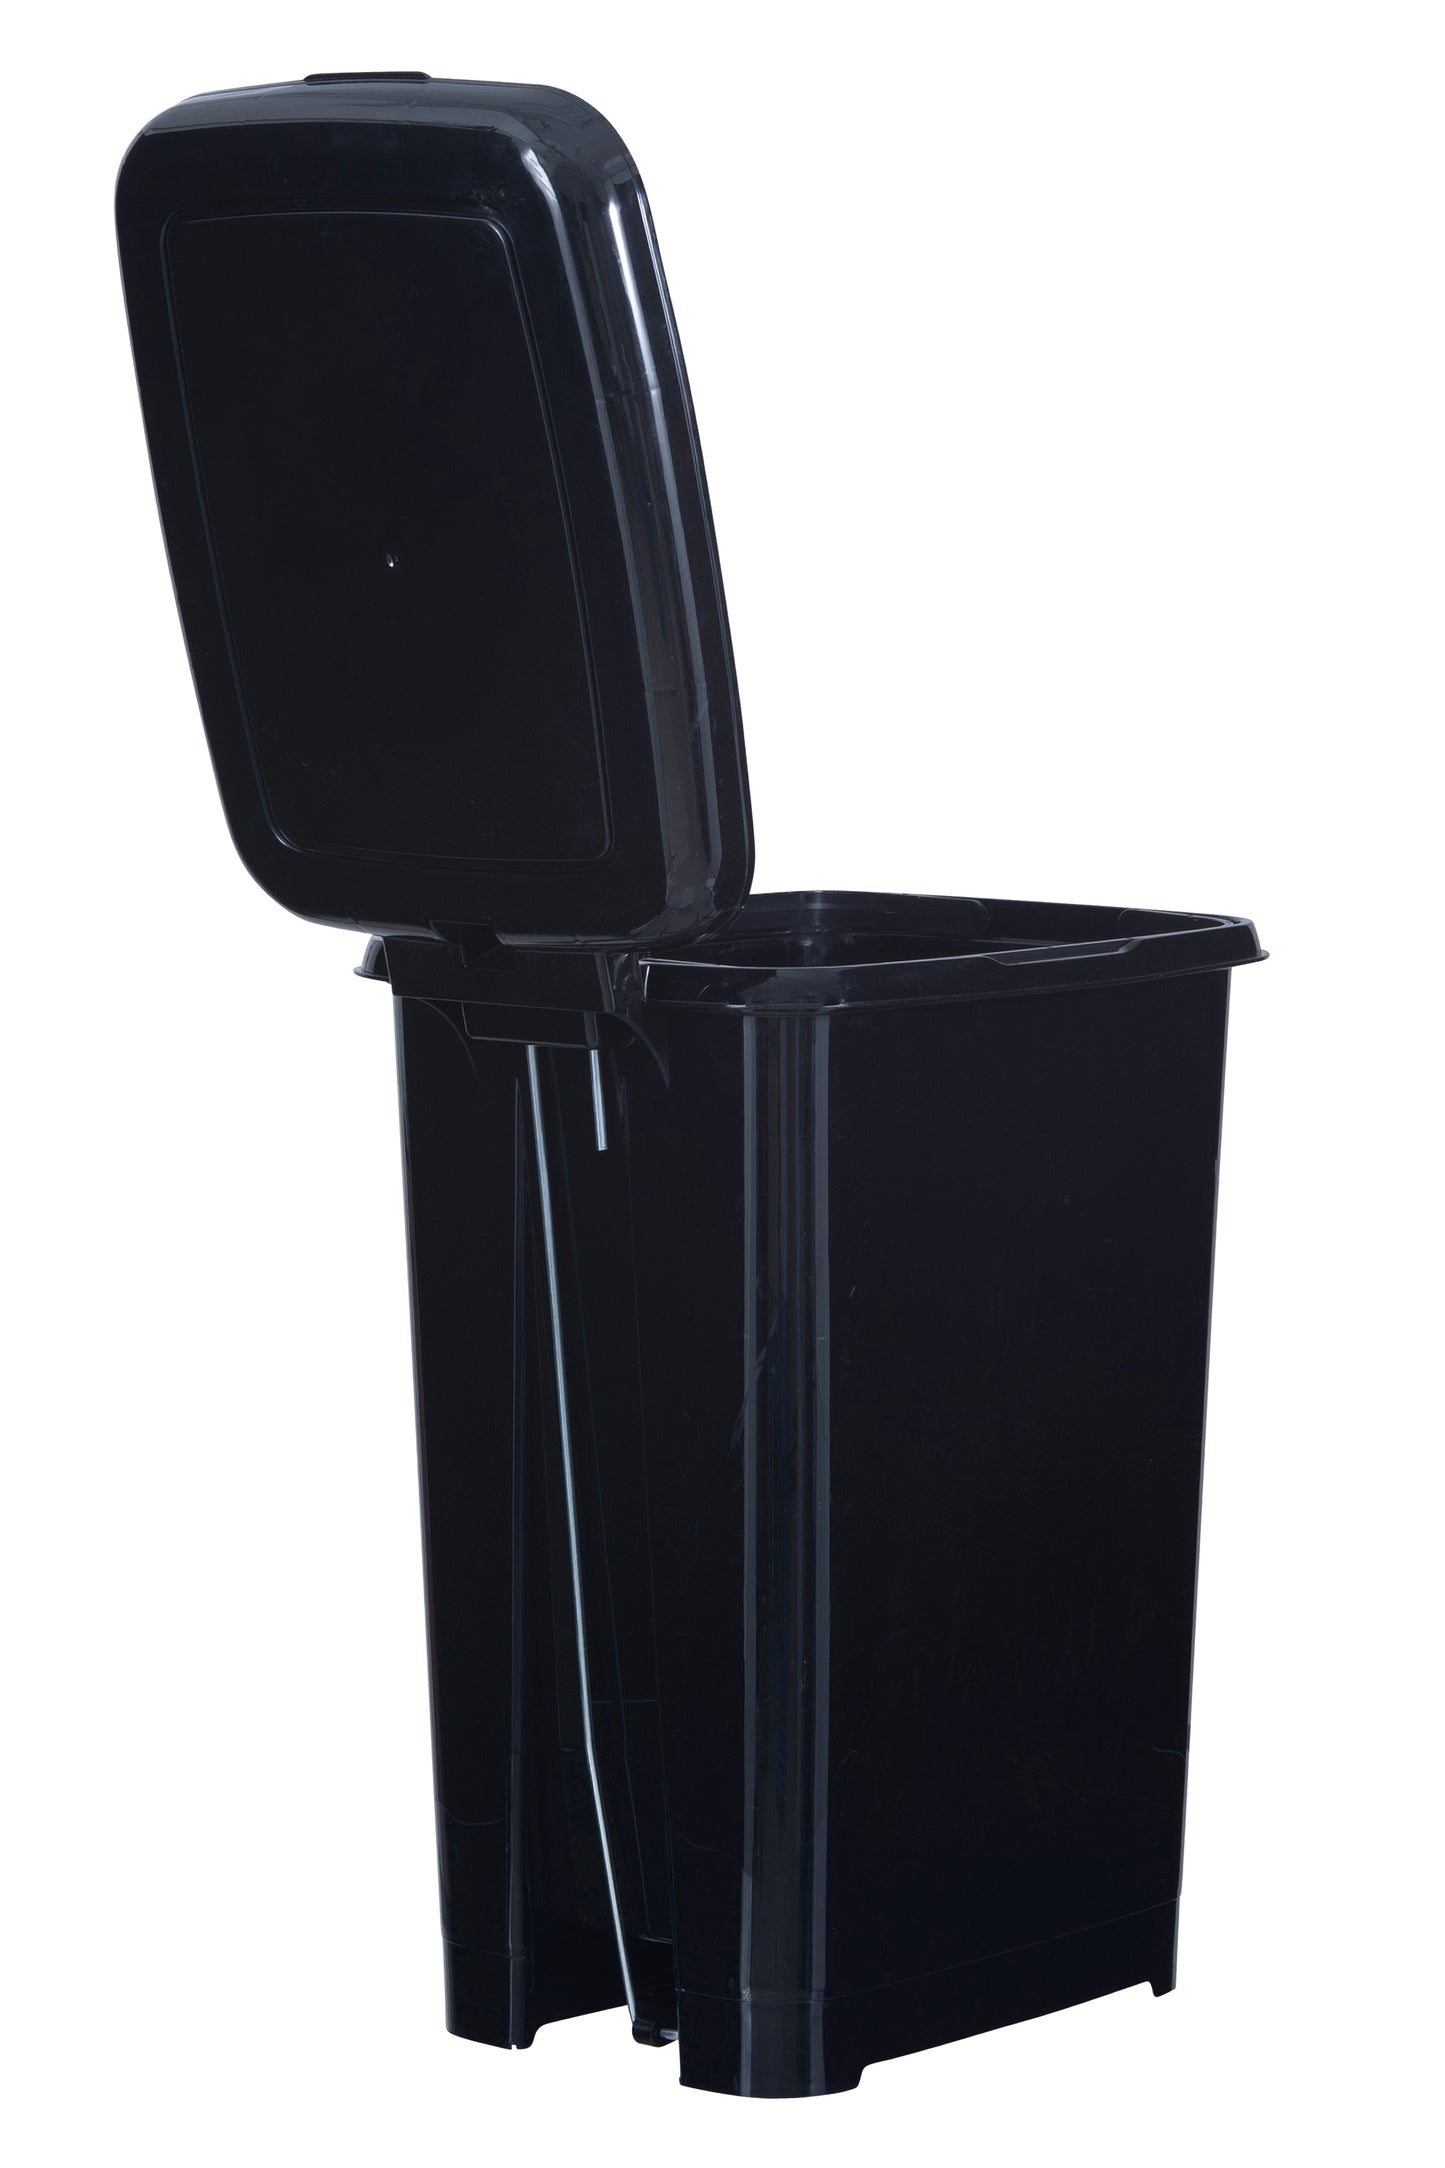 Slim Pedal Trash Can, 64 Qt - Black